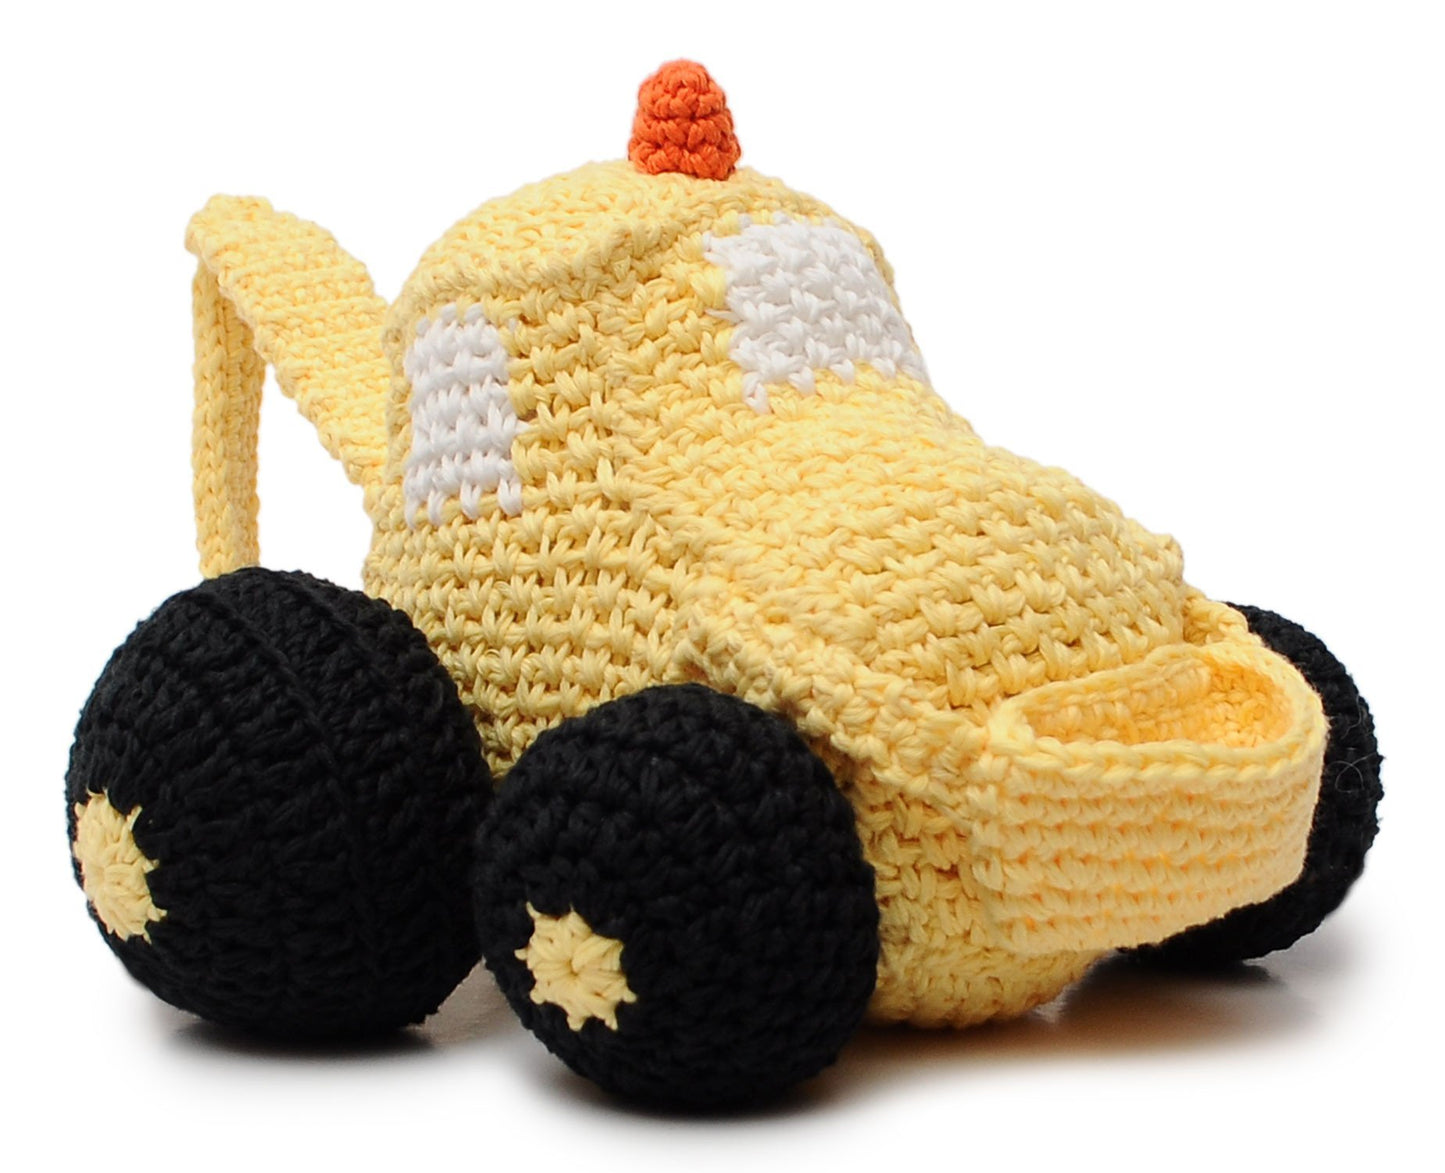 Yellow Digger Handmade Amigurumi Stuffed Toy Knit Crochet Doll VAC